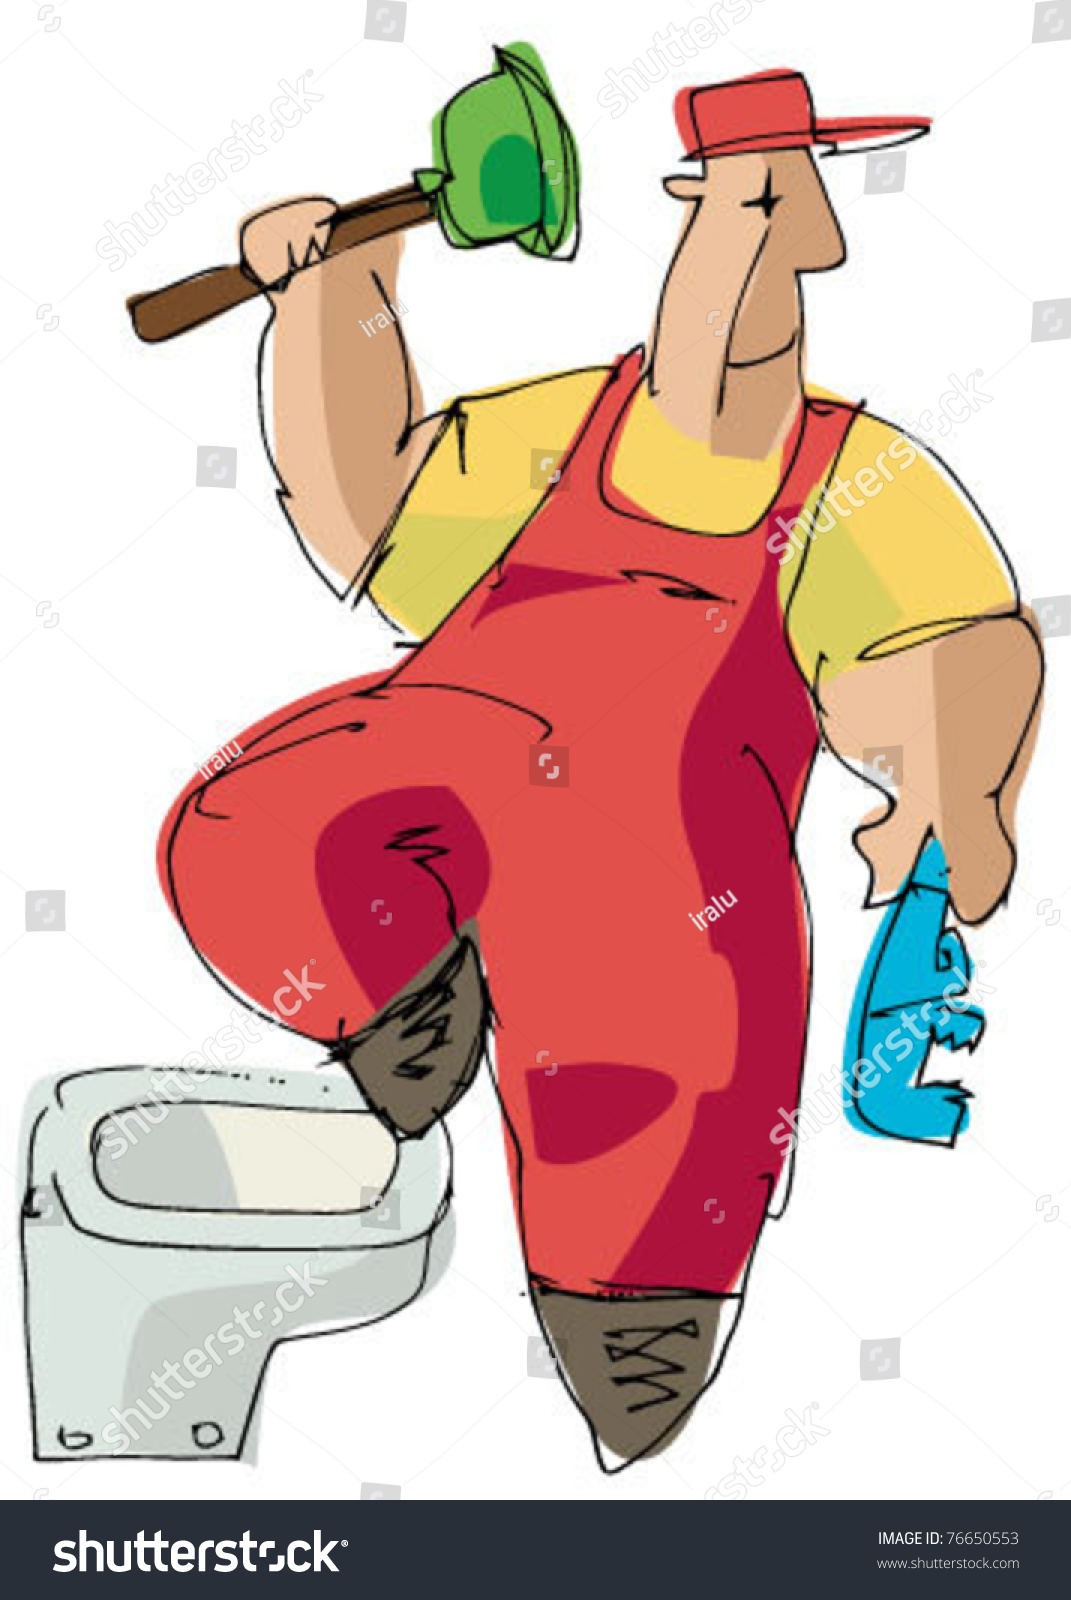 Plumbing Specialist - Cartoon Stock Vector Illustration 76650553